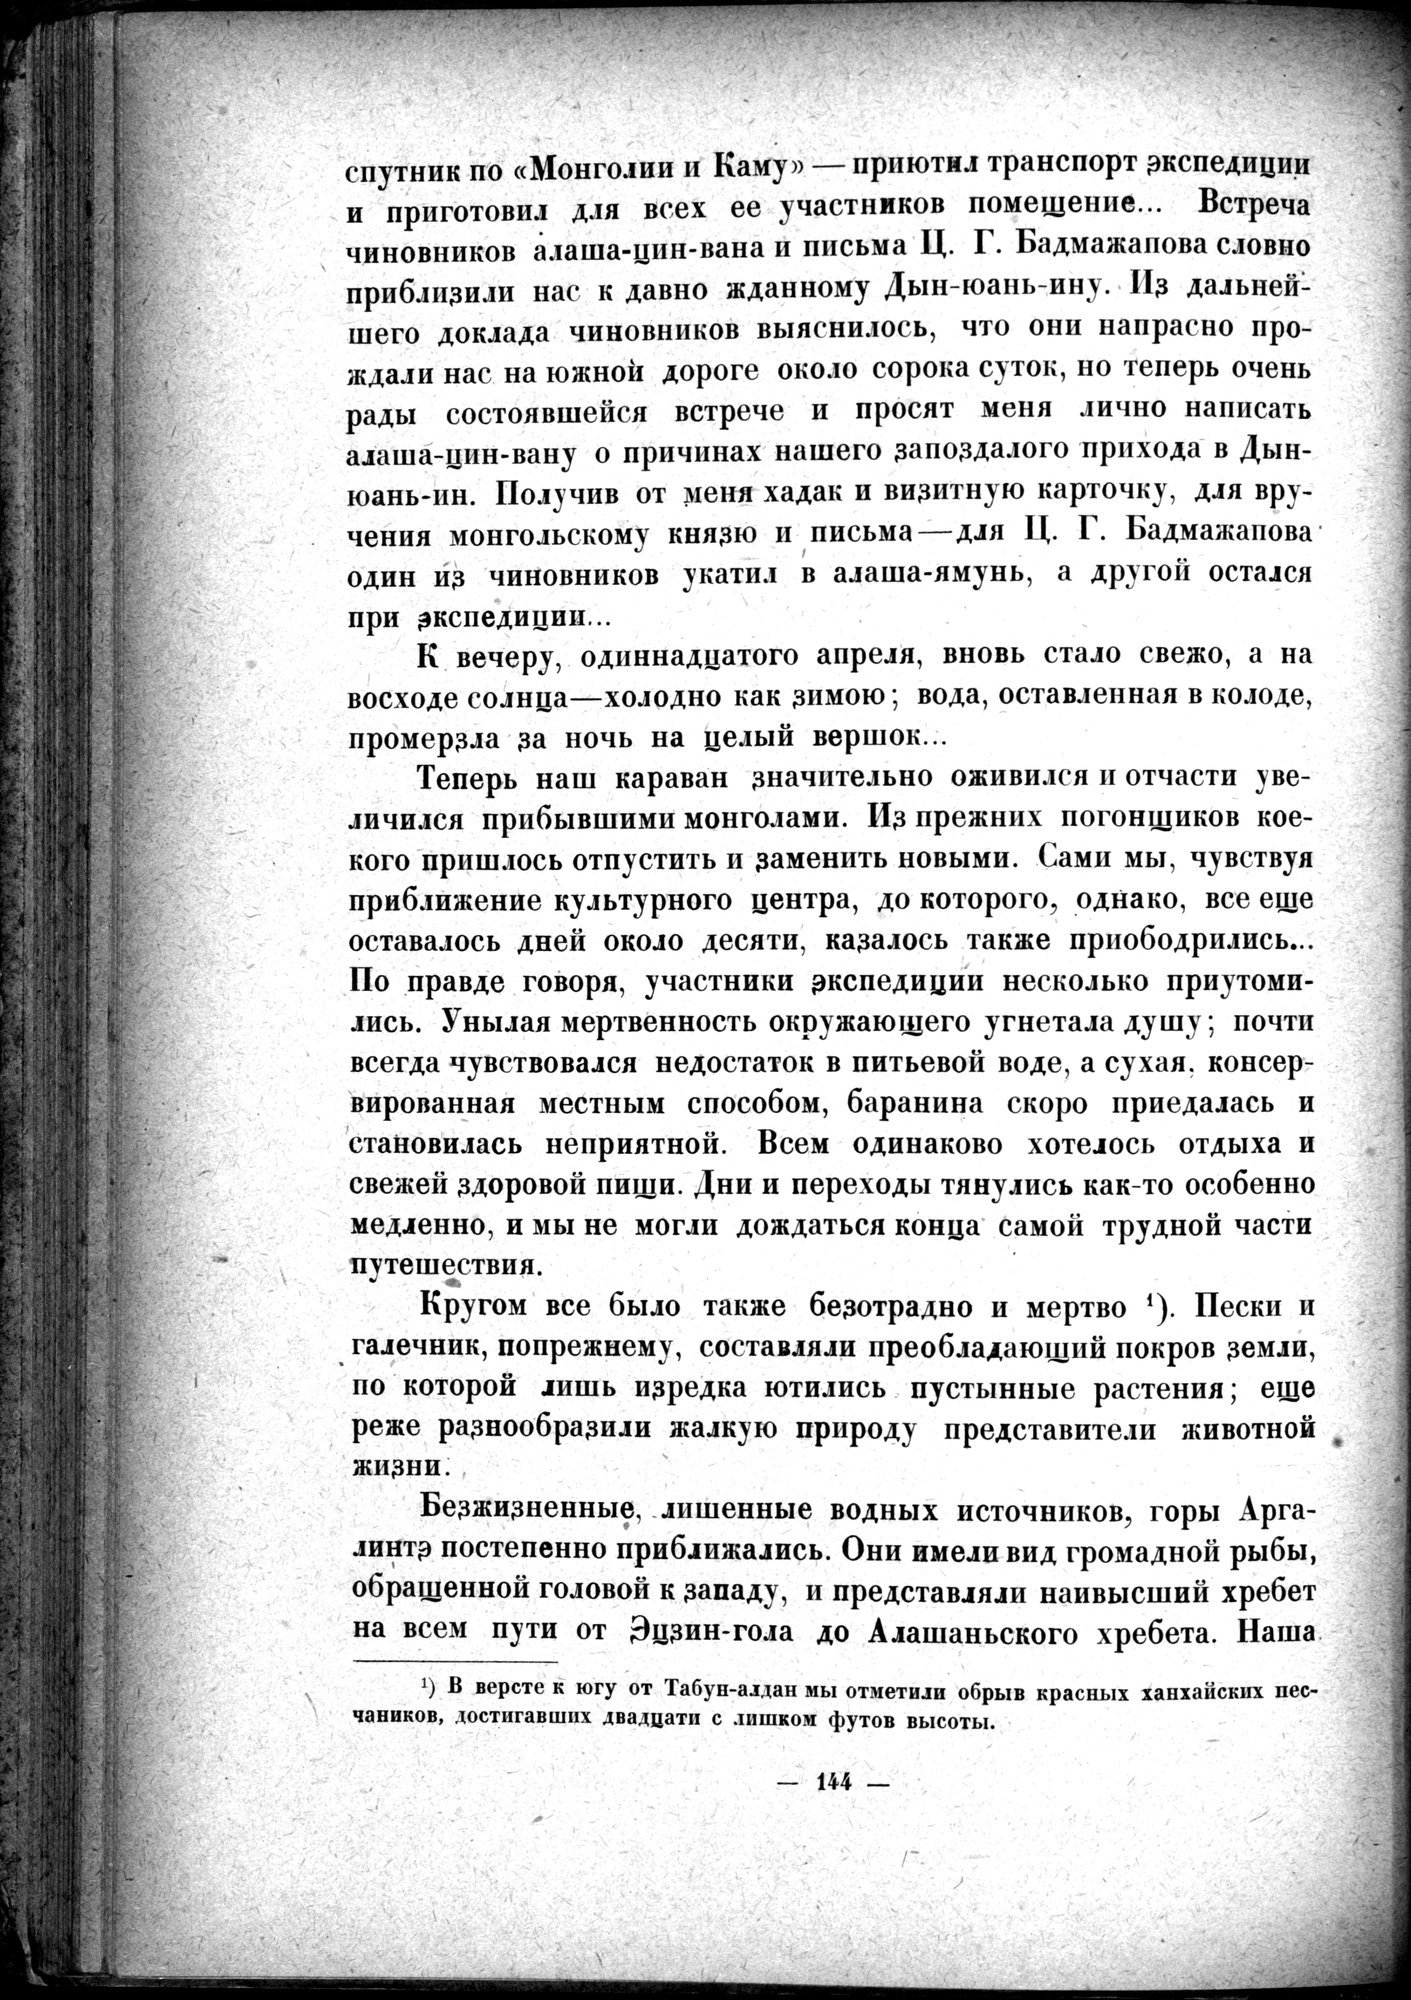 Mongoliya i Amdo i mertby gorod Khara-Khoto : vol.1 / Page 172 (Grayscale High Resolution Image)